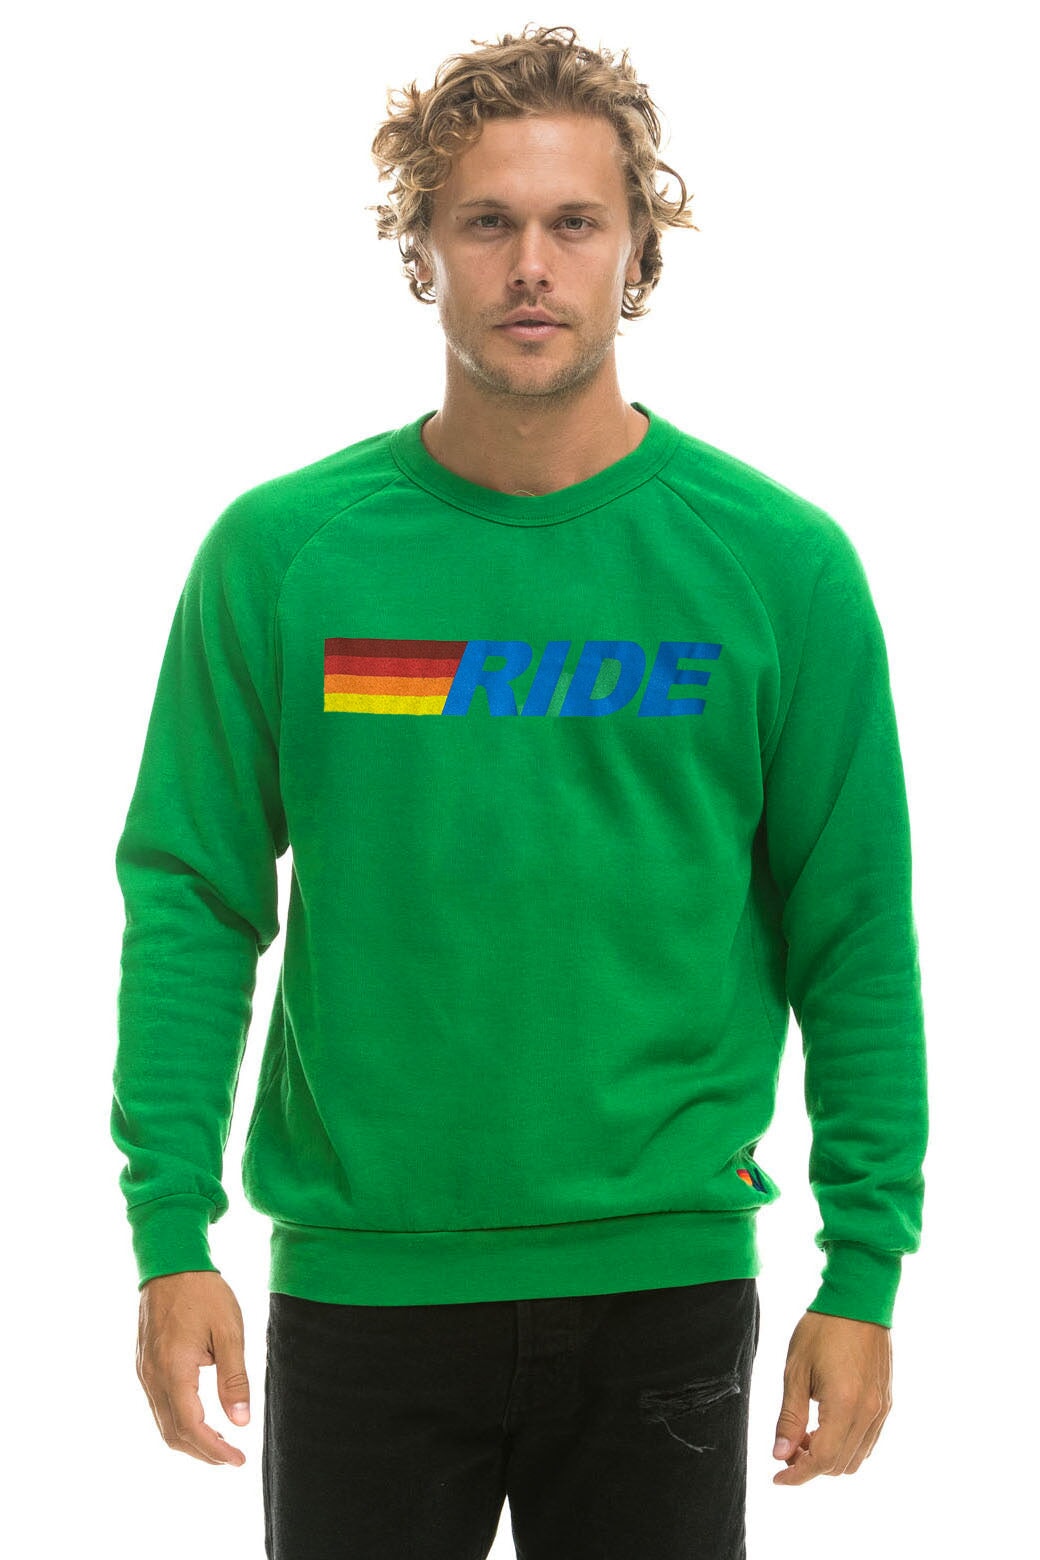 RIDE LOGO CREW SWEATSHIRT - KELLY GREEN Sweatshirt Aviator Nation 